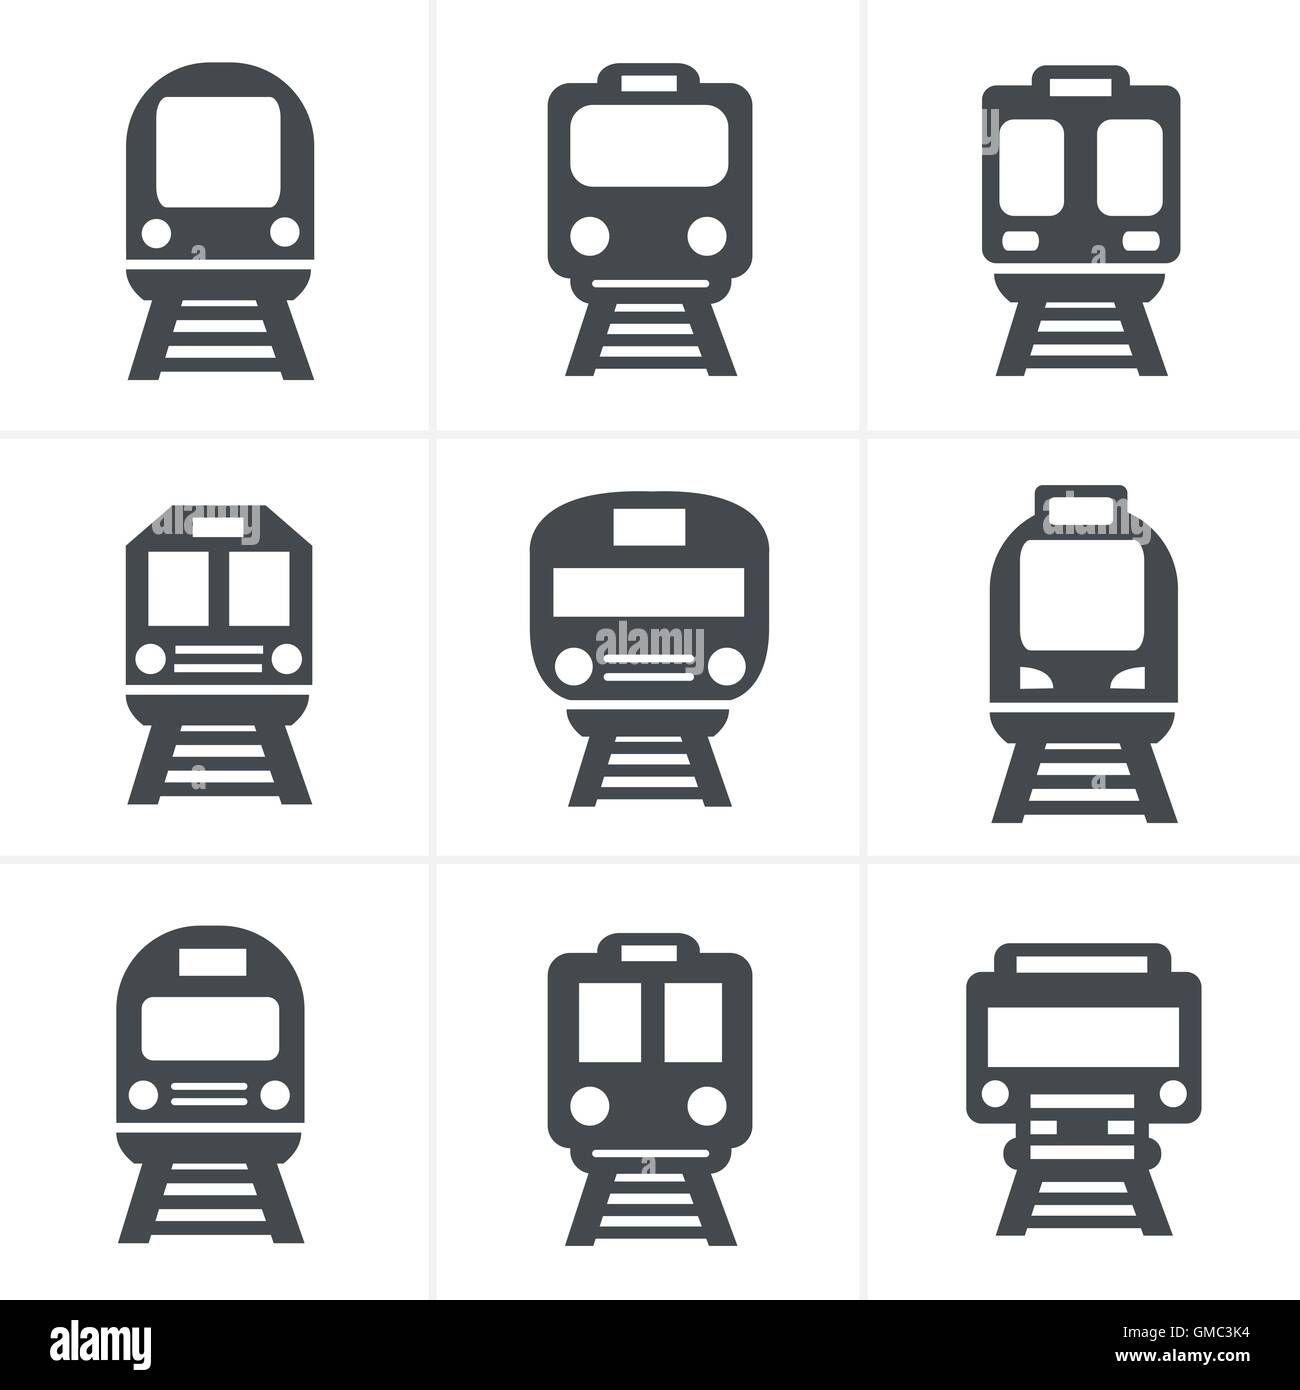 Set von Transport-Icons - Bahn und Tram, Vektor-illustration Stock Vektor